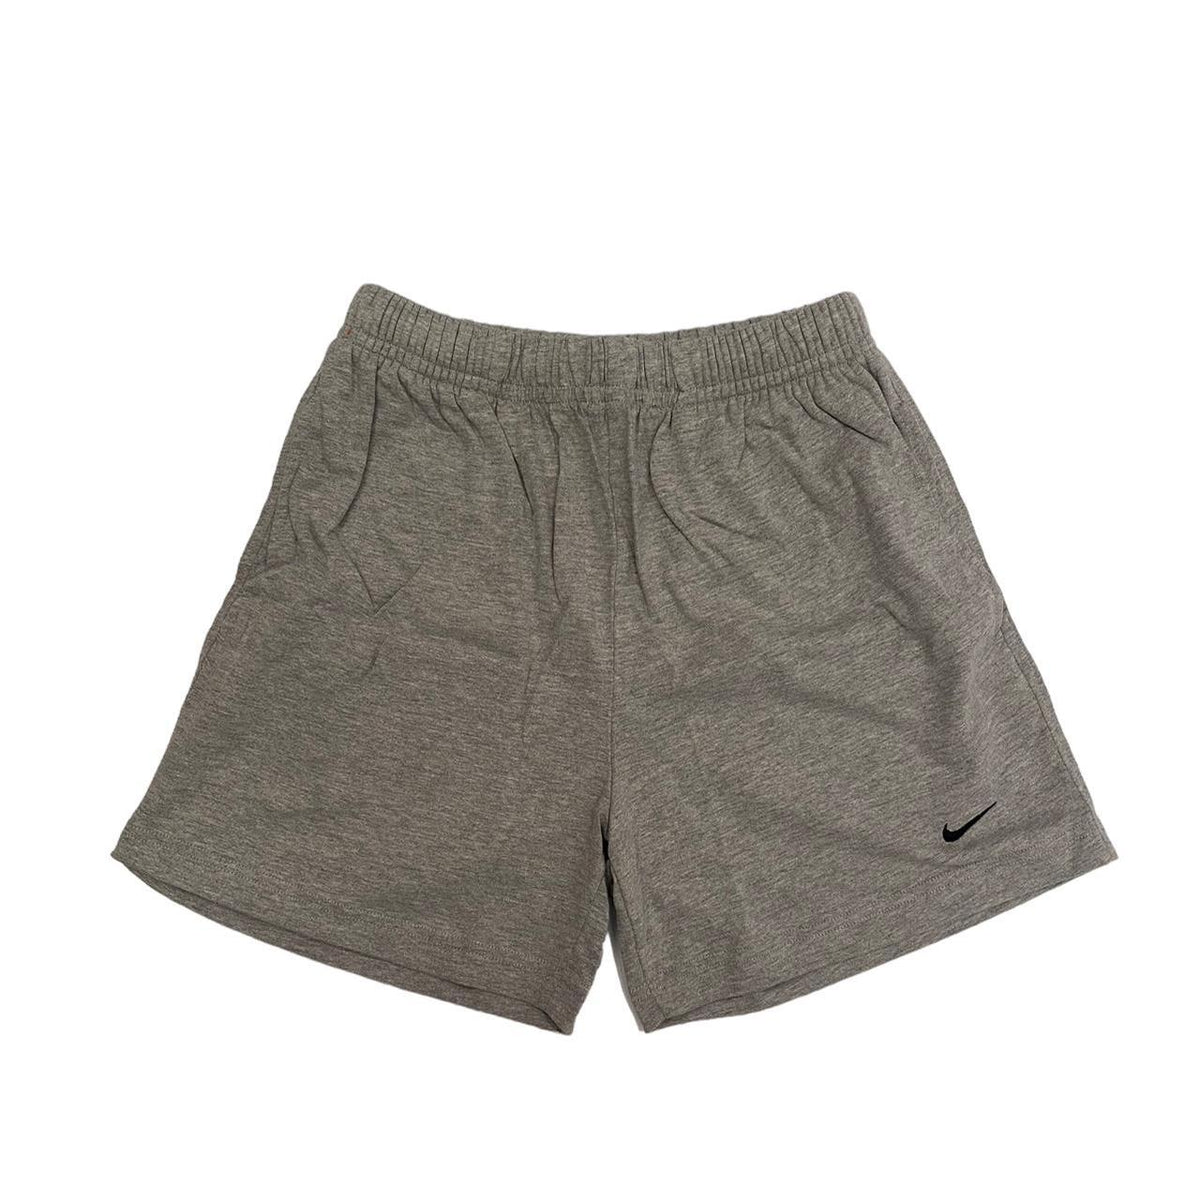 Nike Grey Cotton Shorts